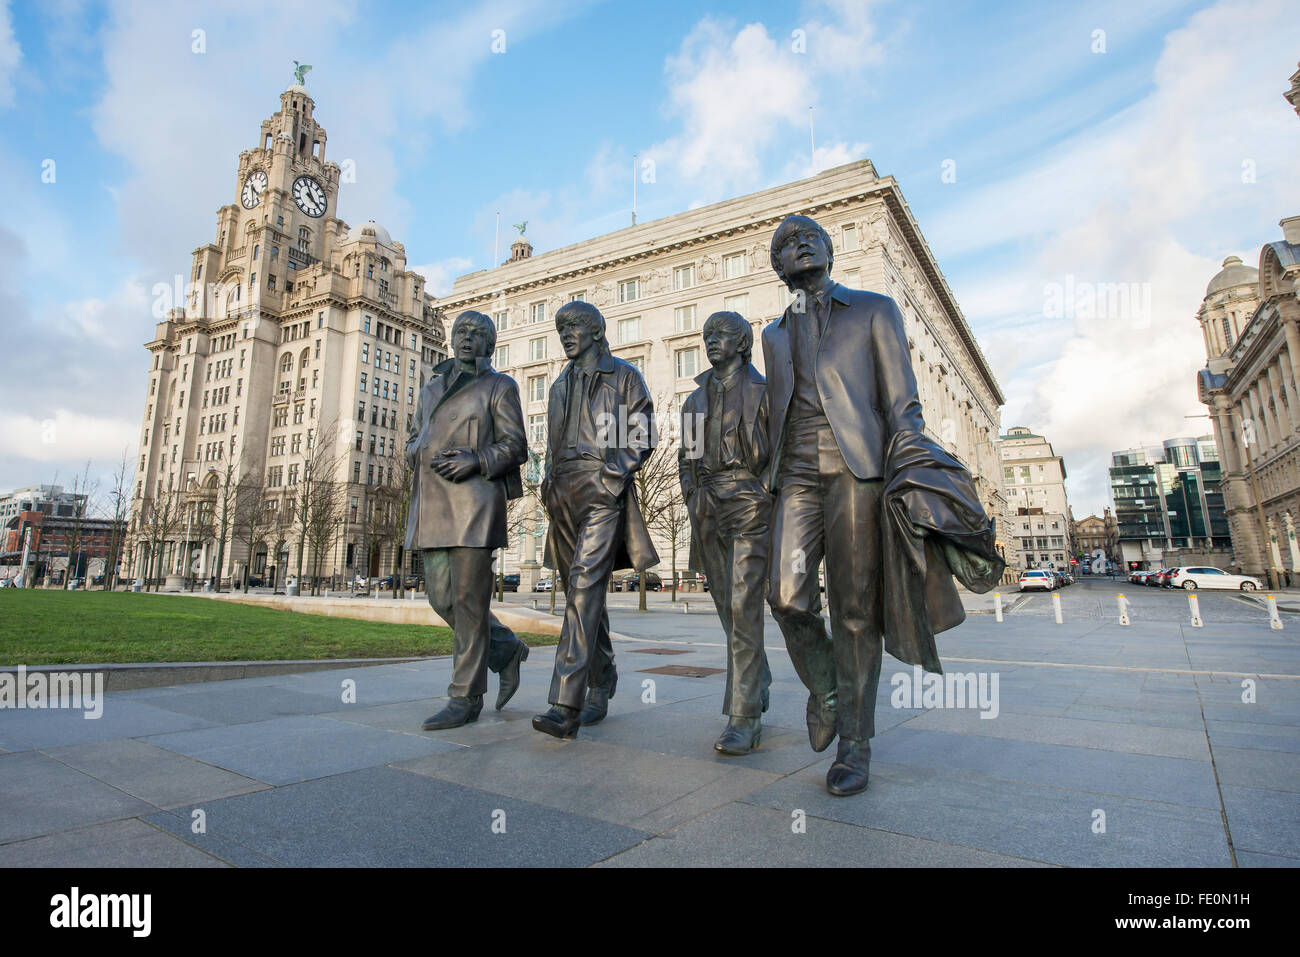 The Beatles Statue - Liverpool. UK Stock Photo